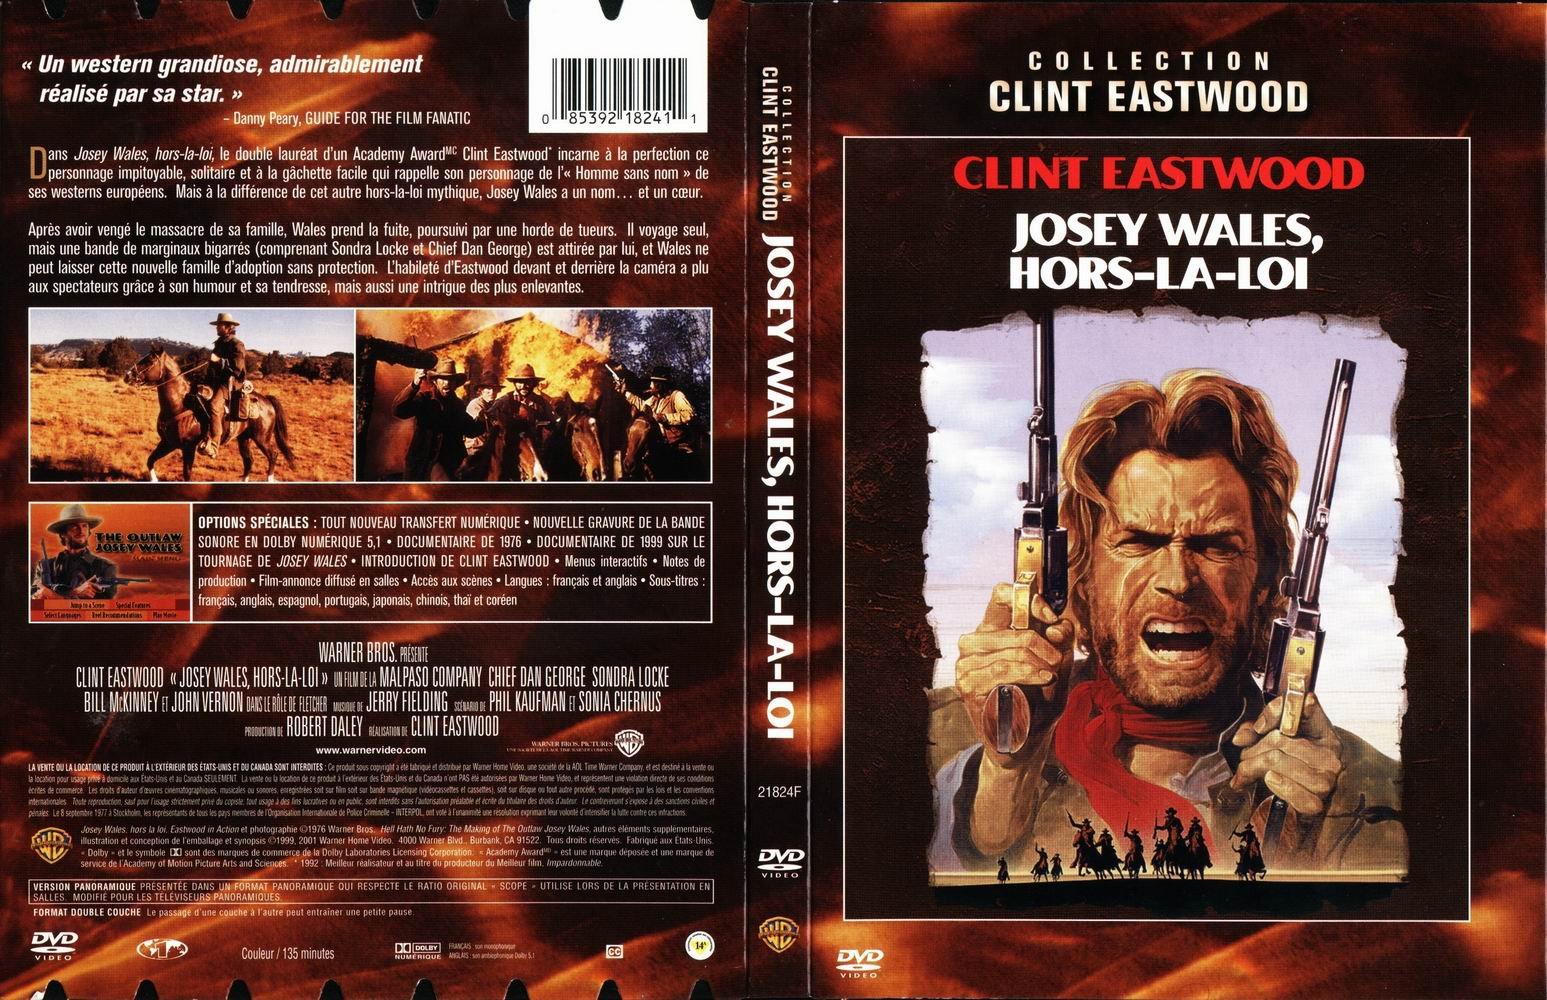 Jaquette DVD Josey Wales hors-la-loi v2